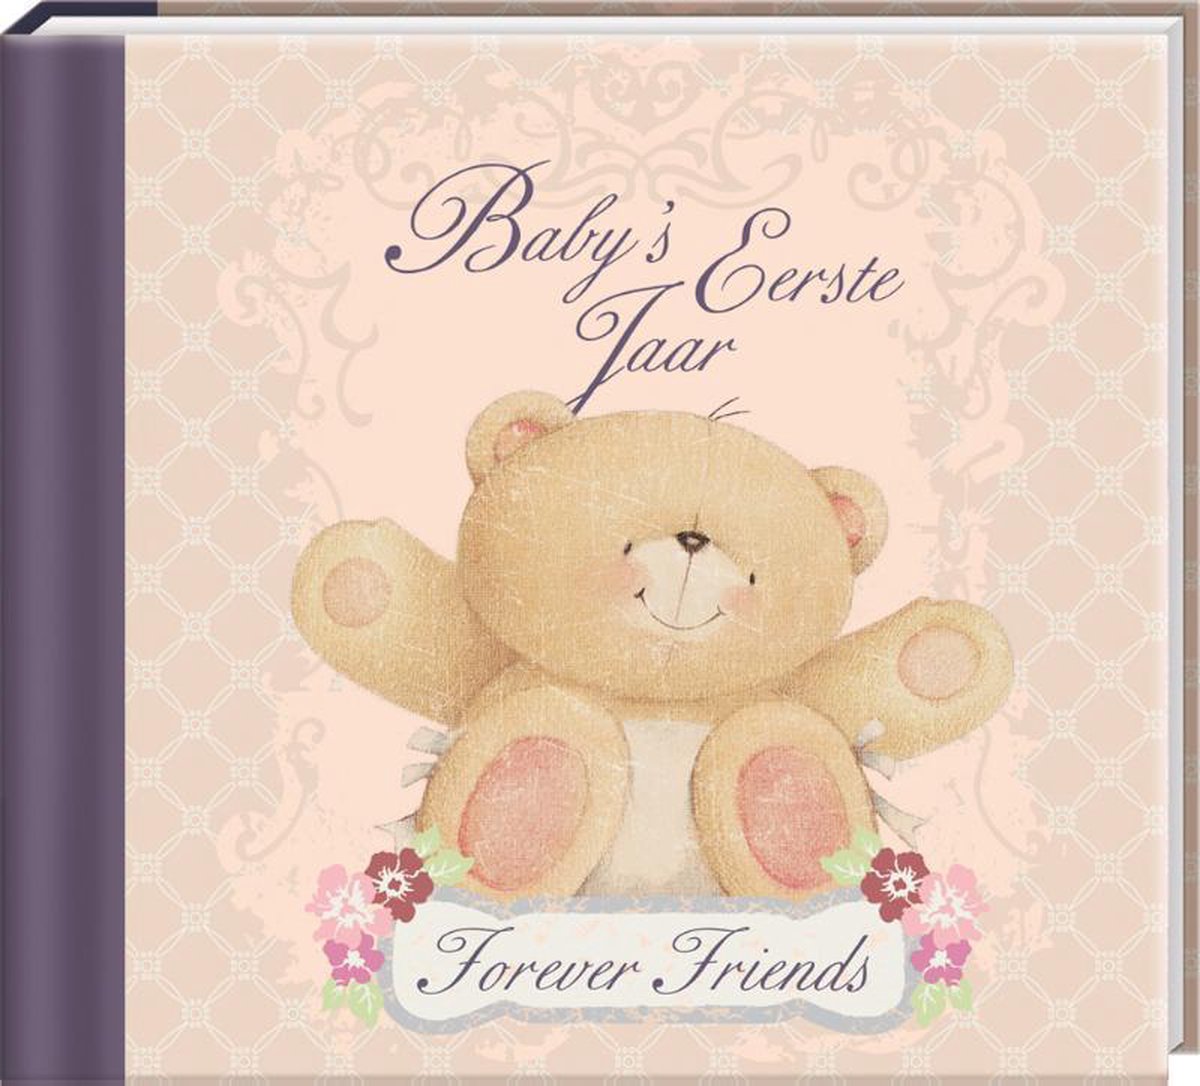 Forever Friend Baby's eerste jarenboek